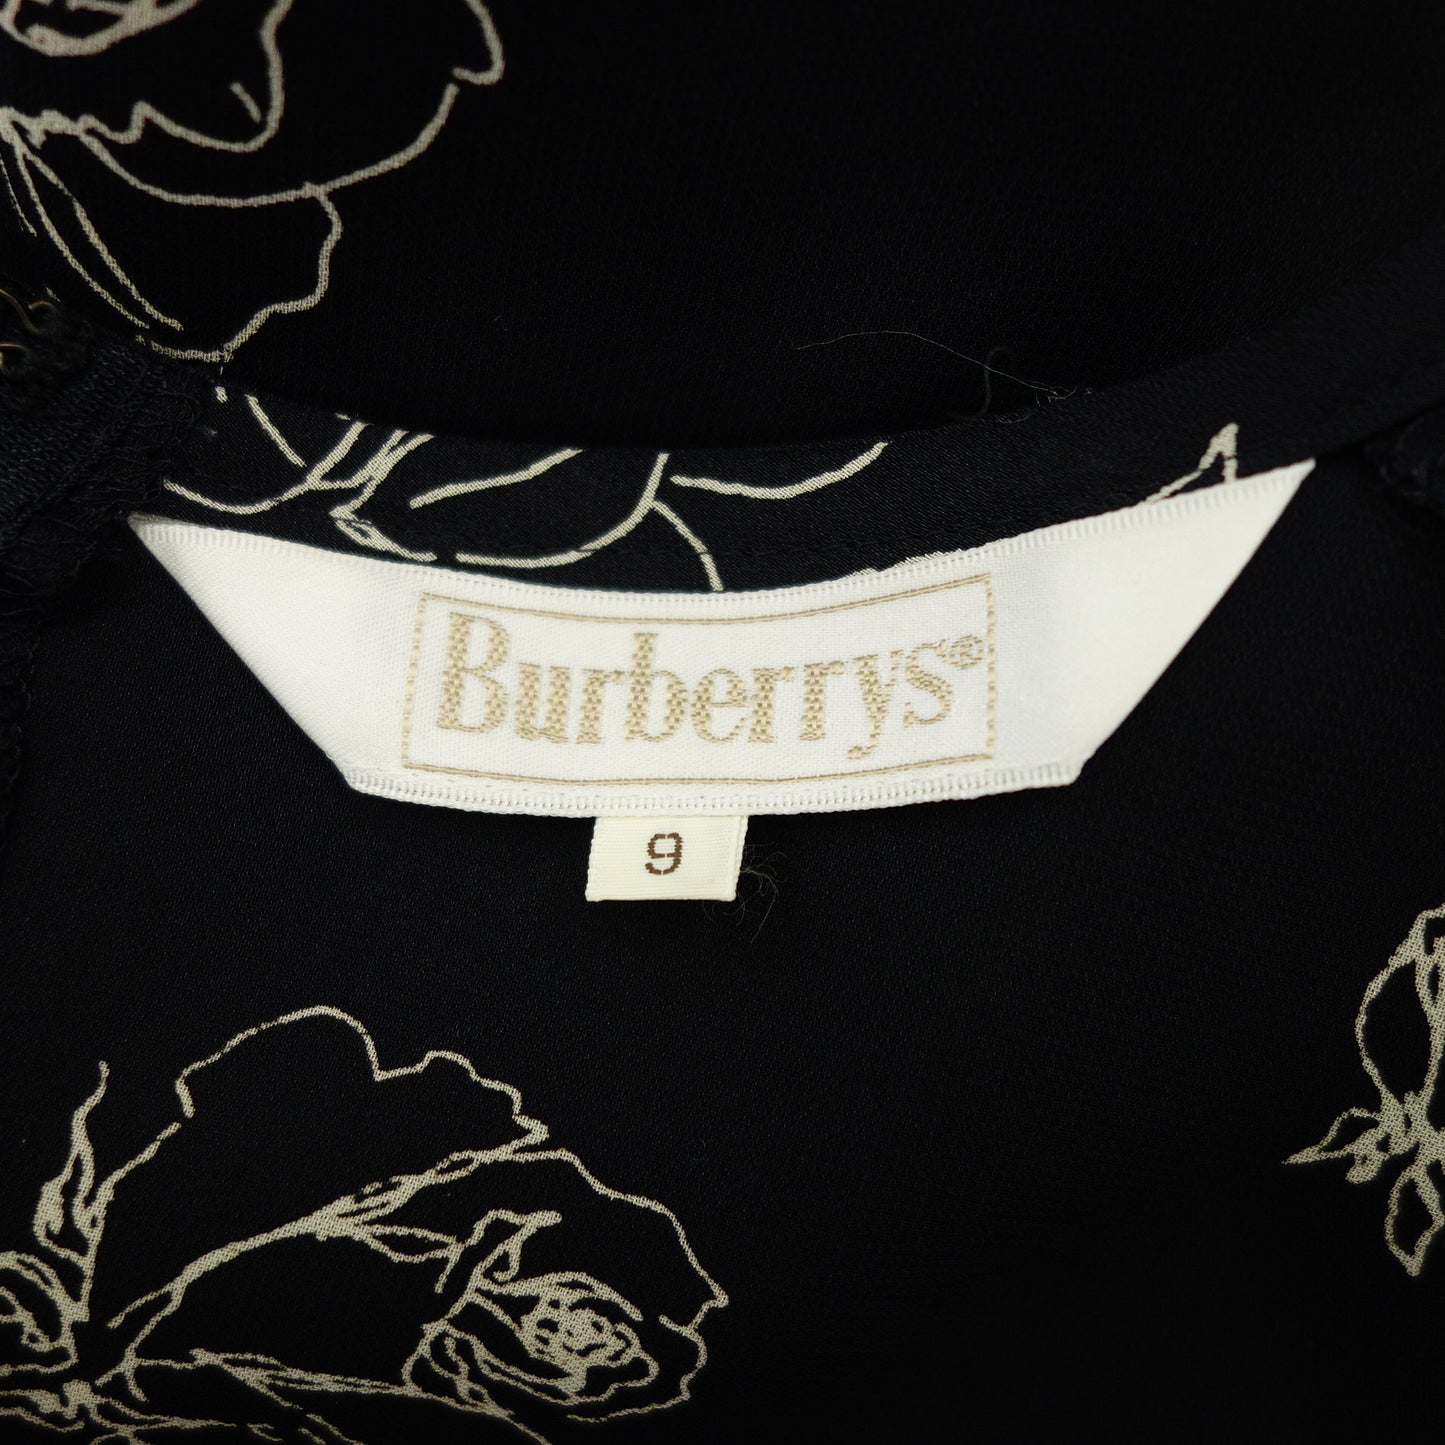 Burberrys 长连衣裙花卉图案 9 女式海军蓝 Burberrys [AFB35] [二手] 